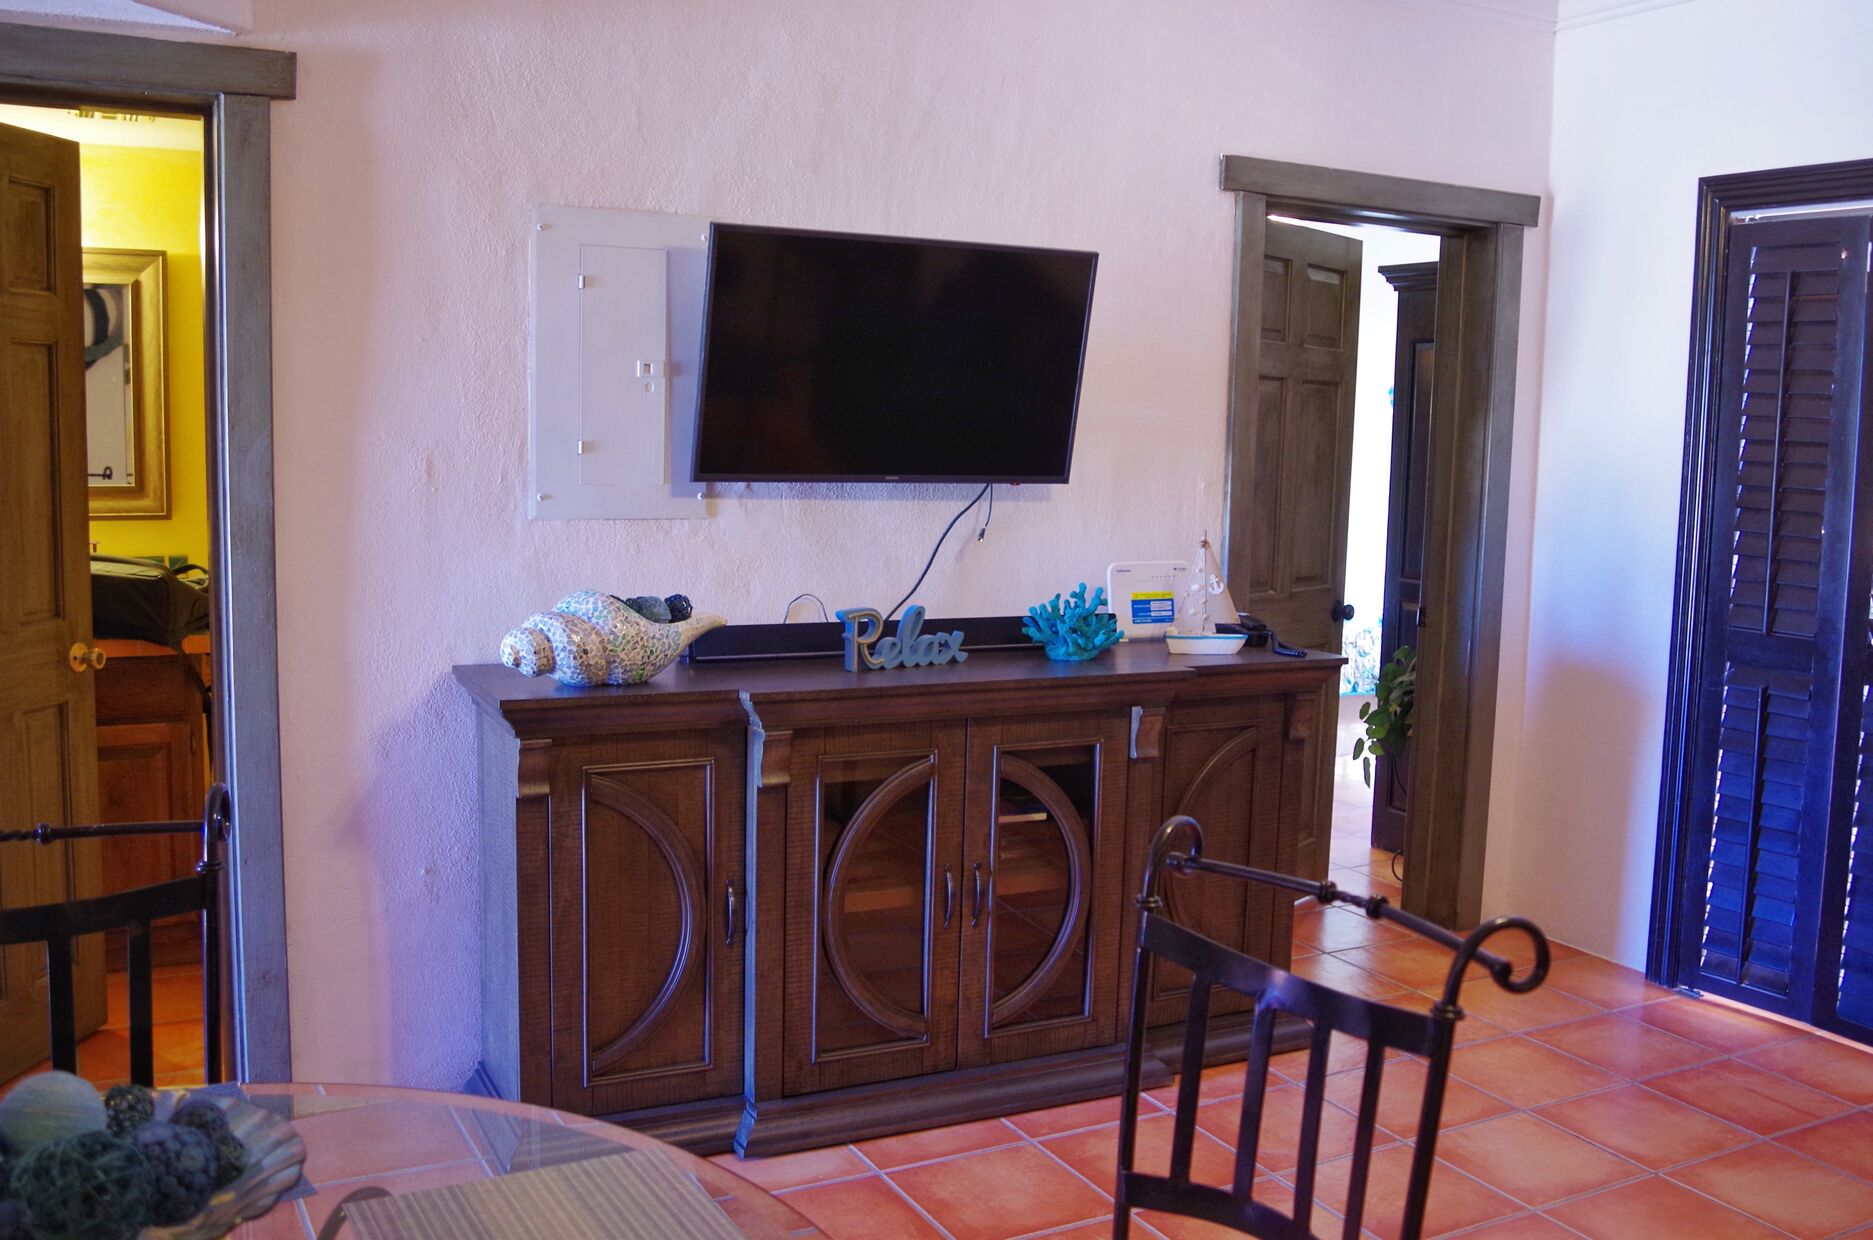 Living Room Plasma TV